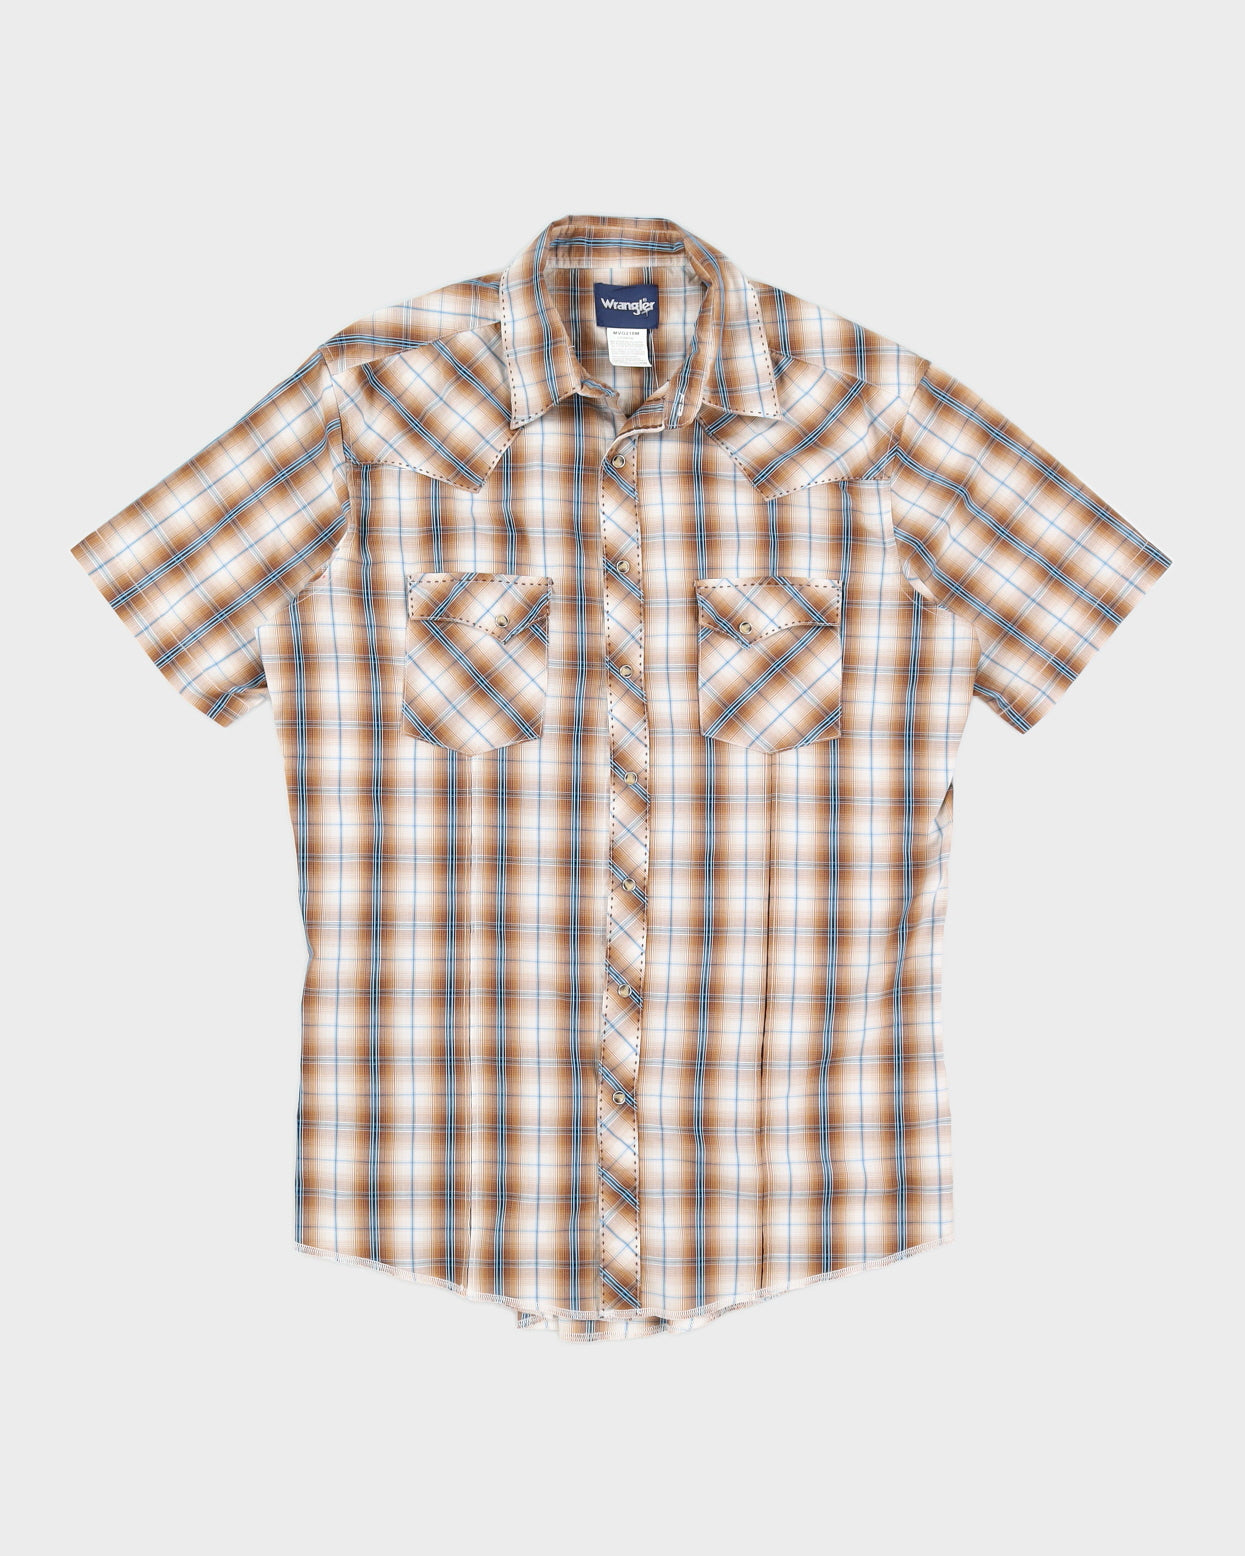 Wrangler Brown Checked Western Shirt - XL